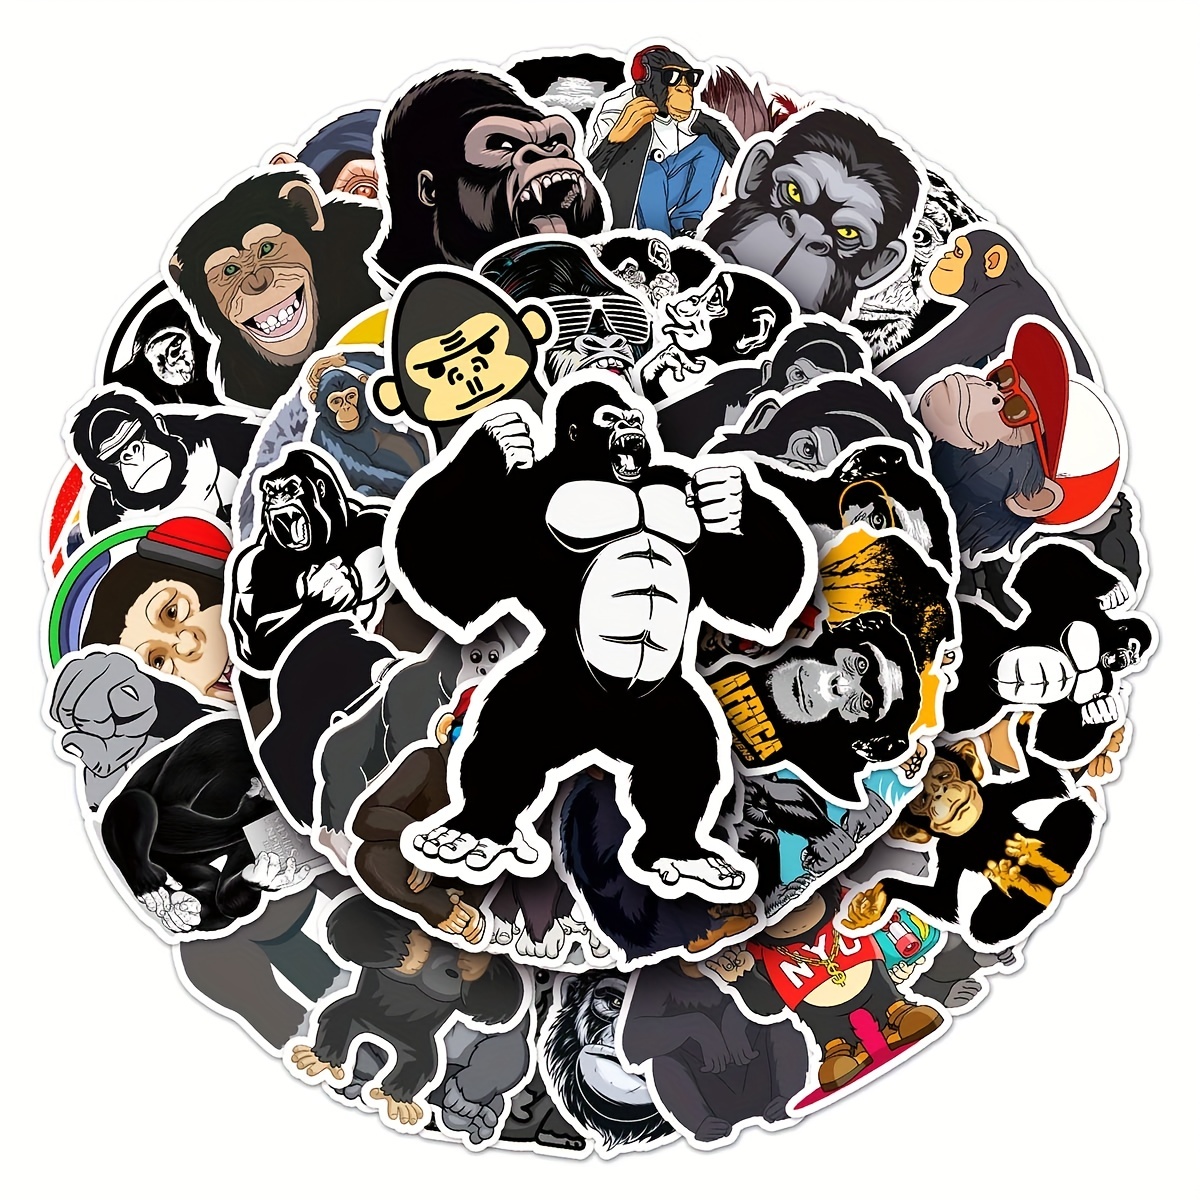 No-repeat Gorilla Tag Sticker Hand-painted Art Sense Decoration